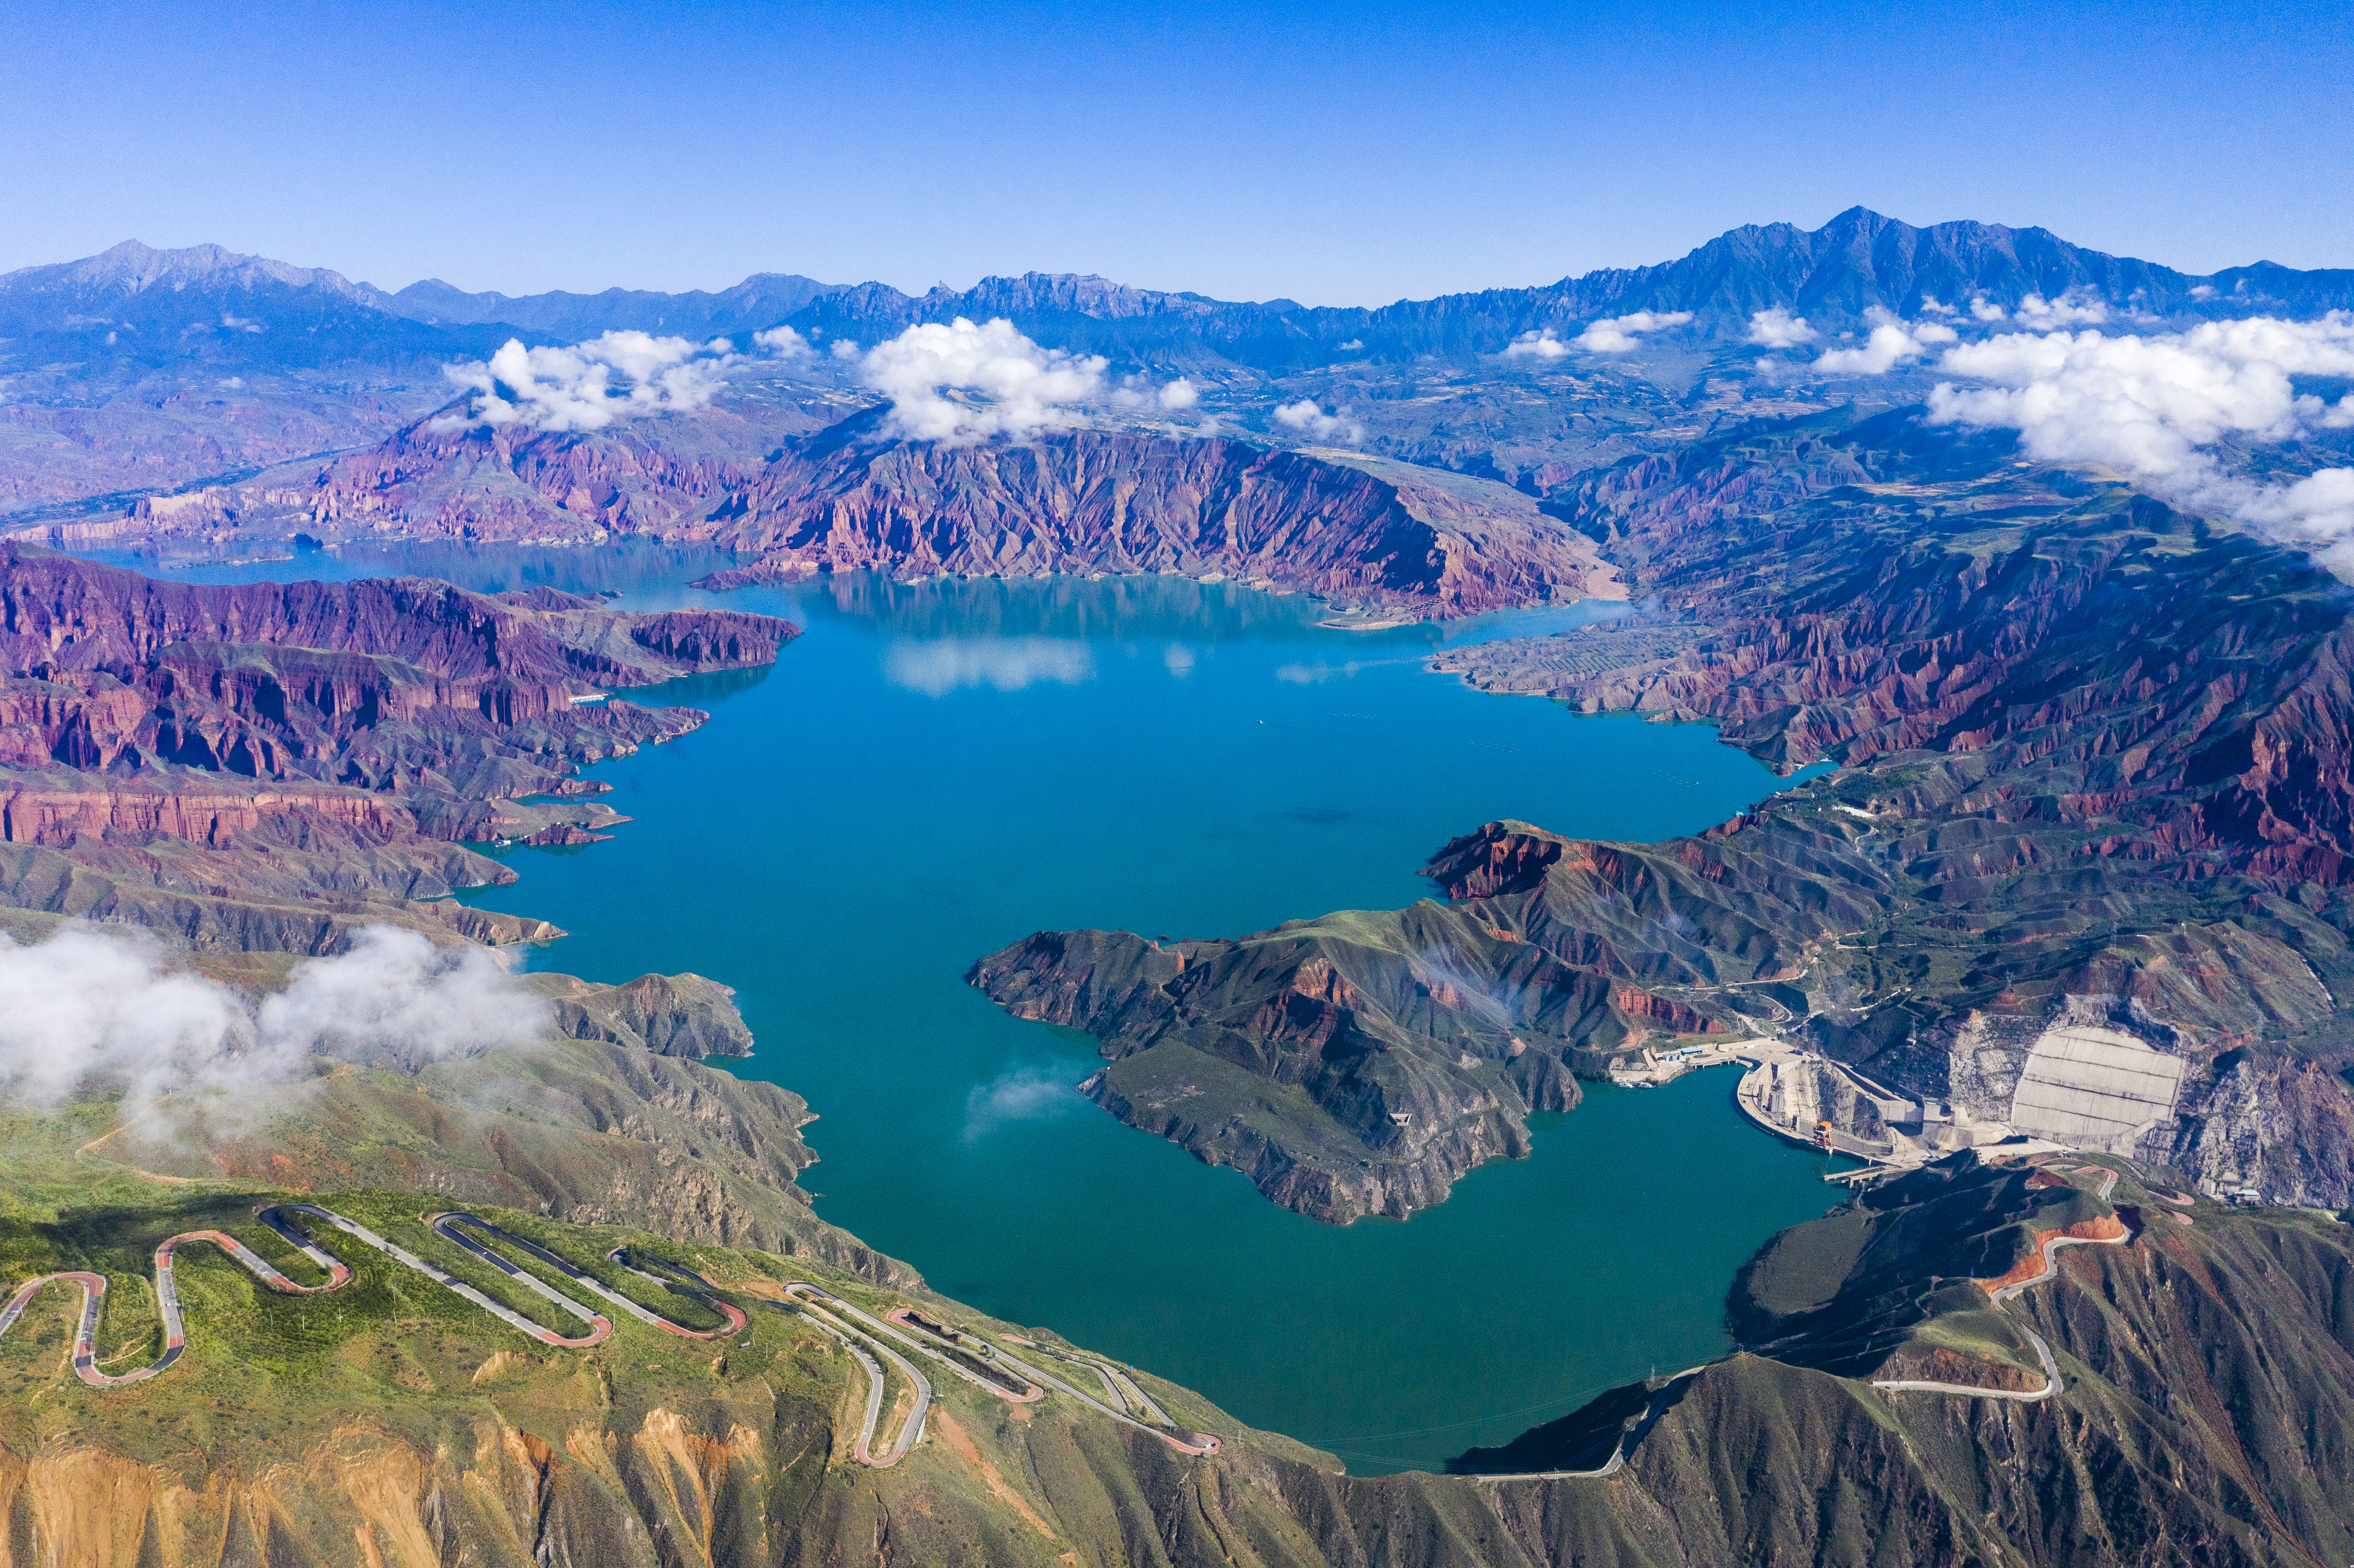 Spectacular views stun visitors in Qinghai